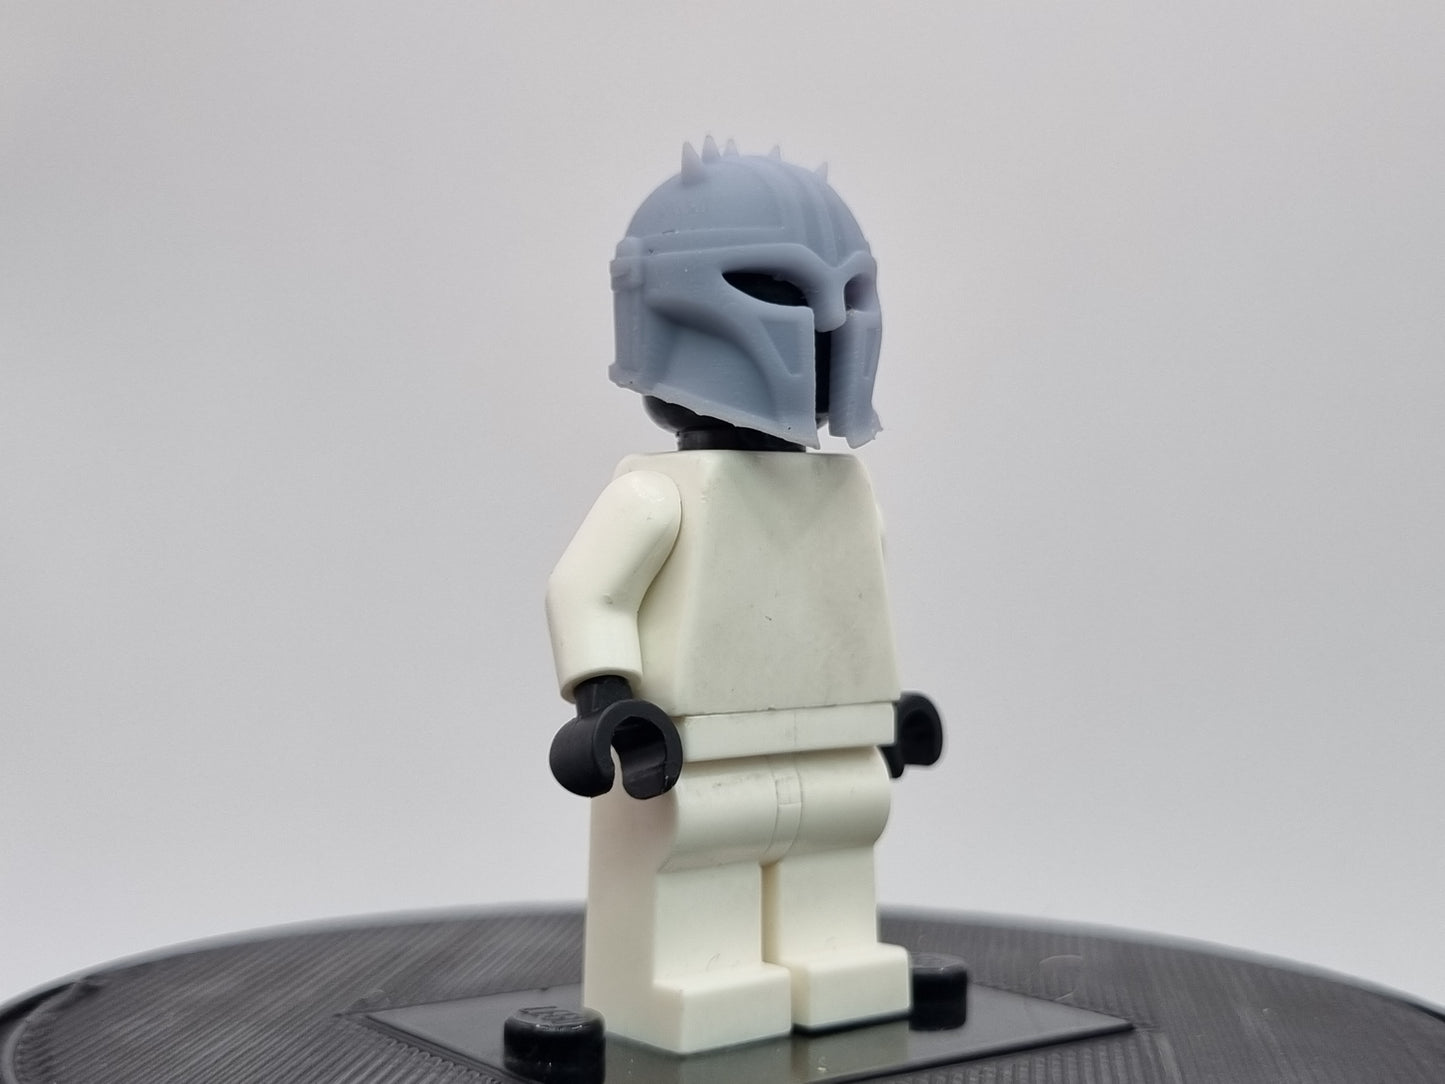 lego compatible 3D printed spike helmet!